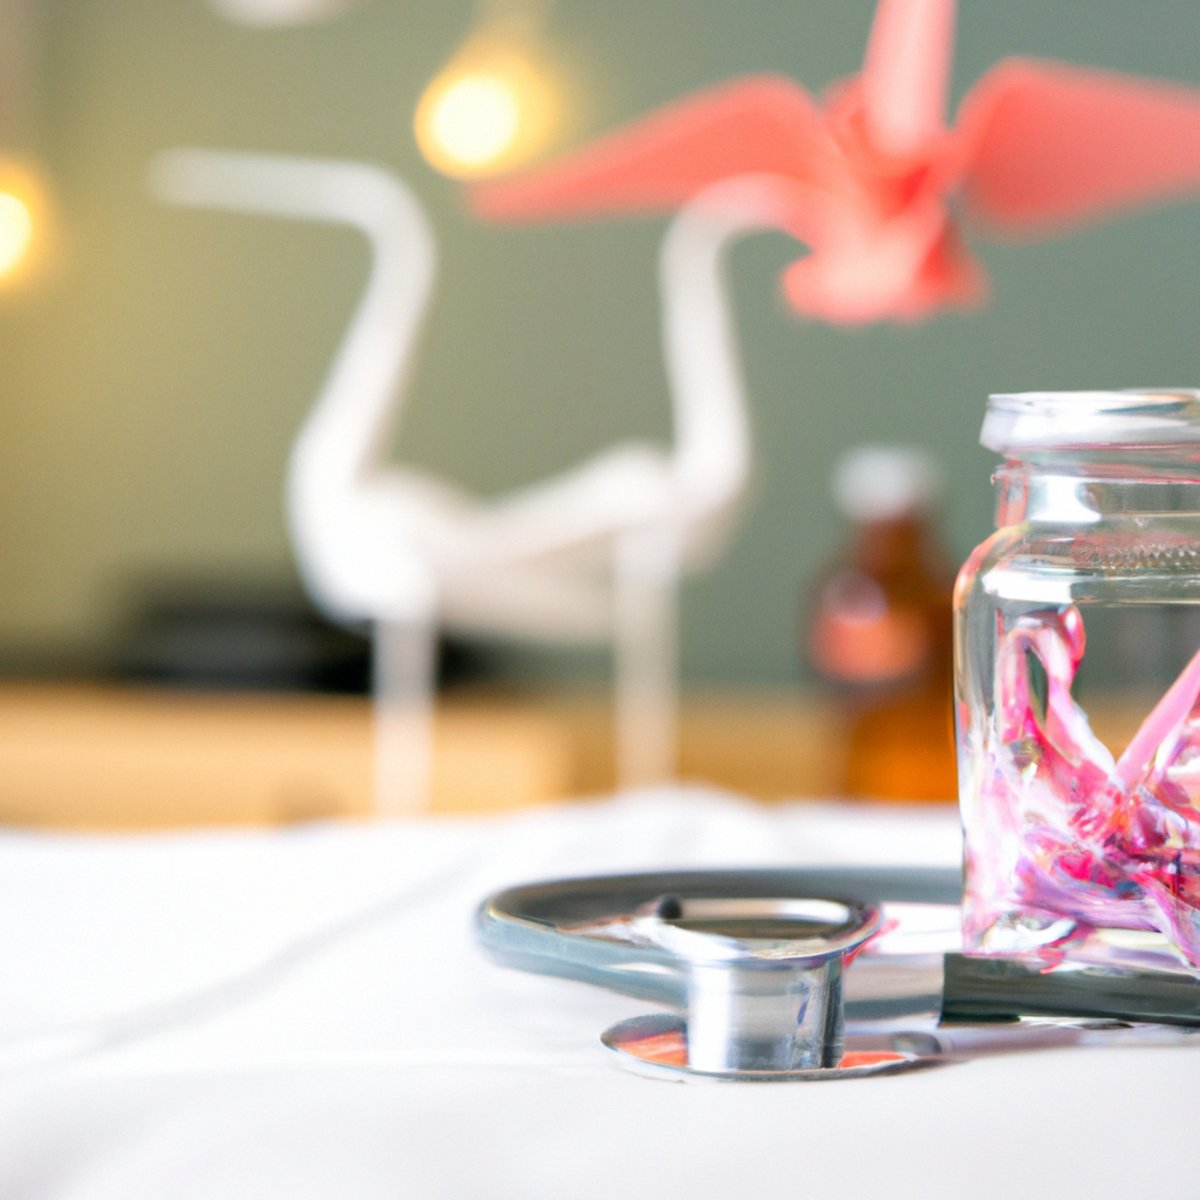 Stethoscope and jar of origami cranes on a table in a hospital - Pleuropulmonary Blastoma